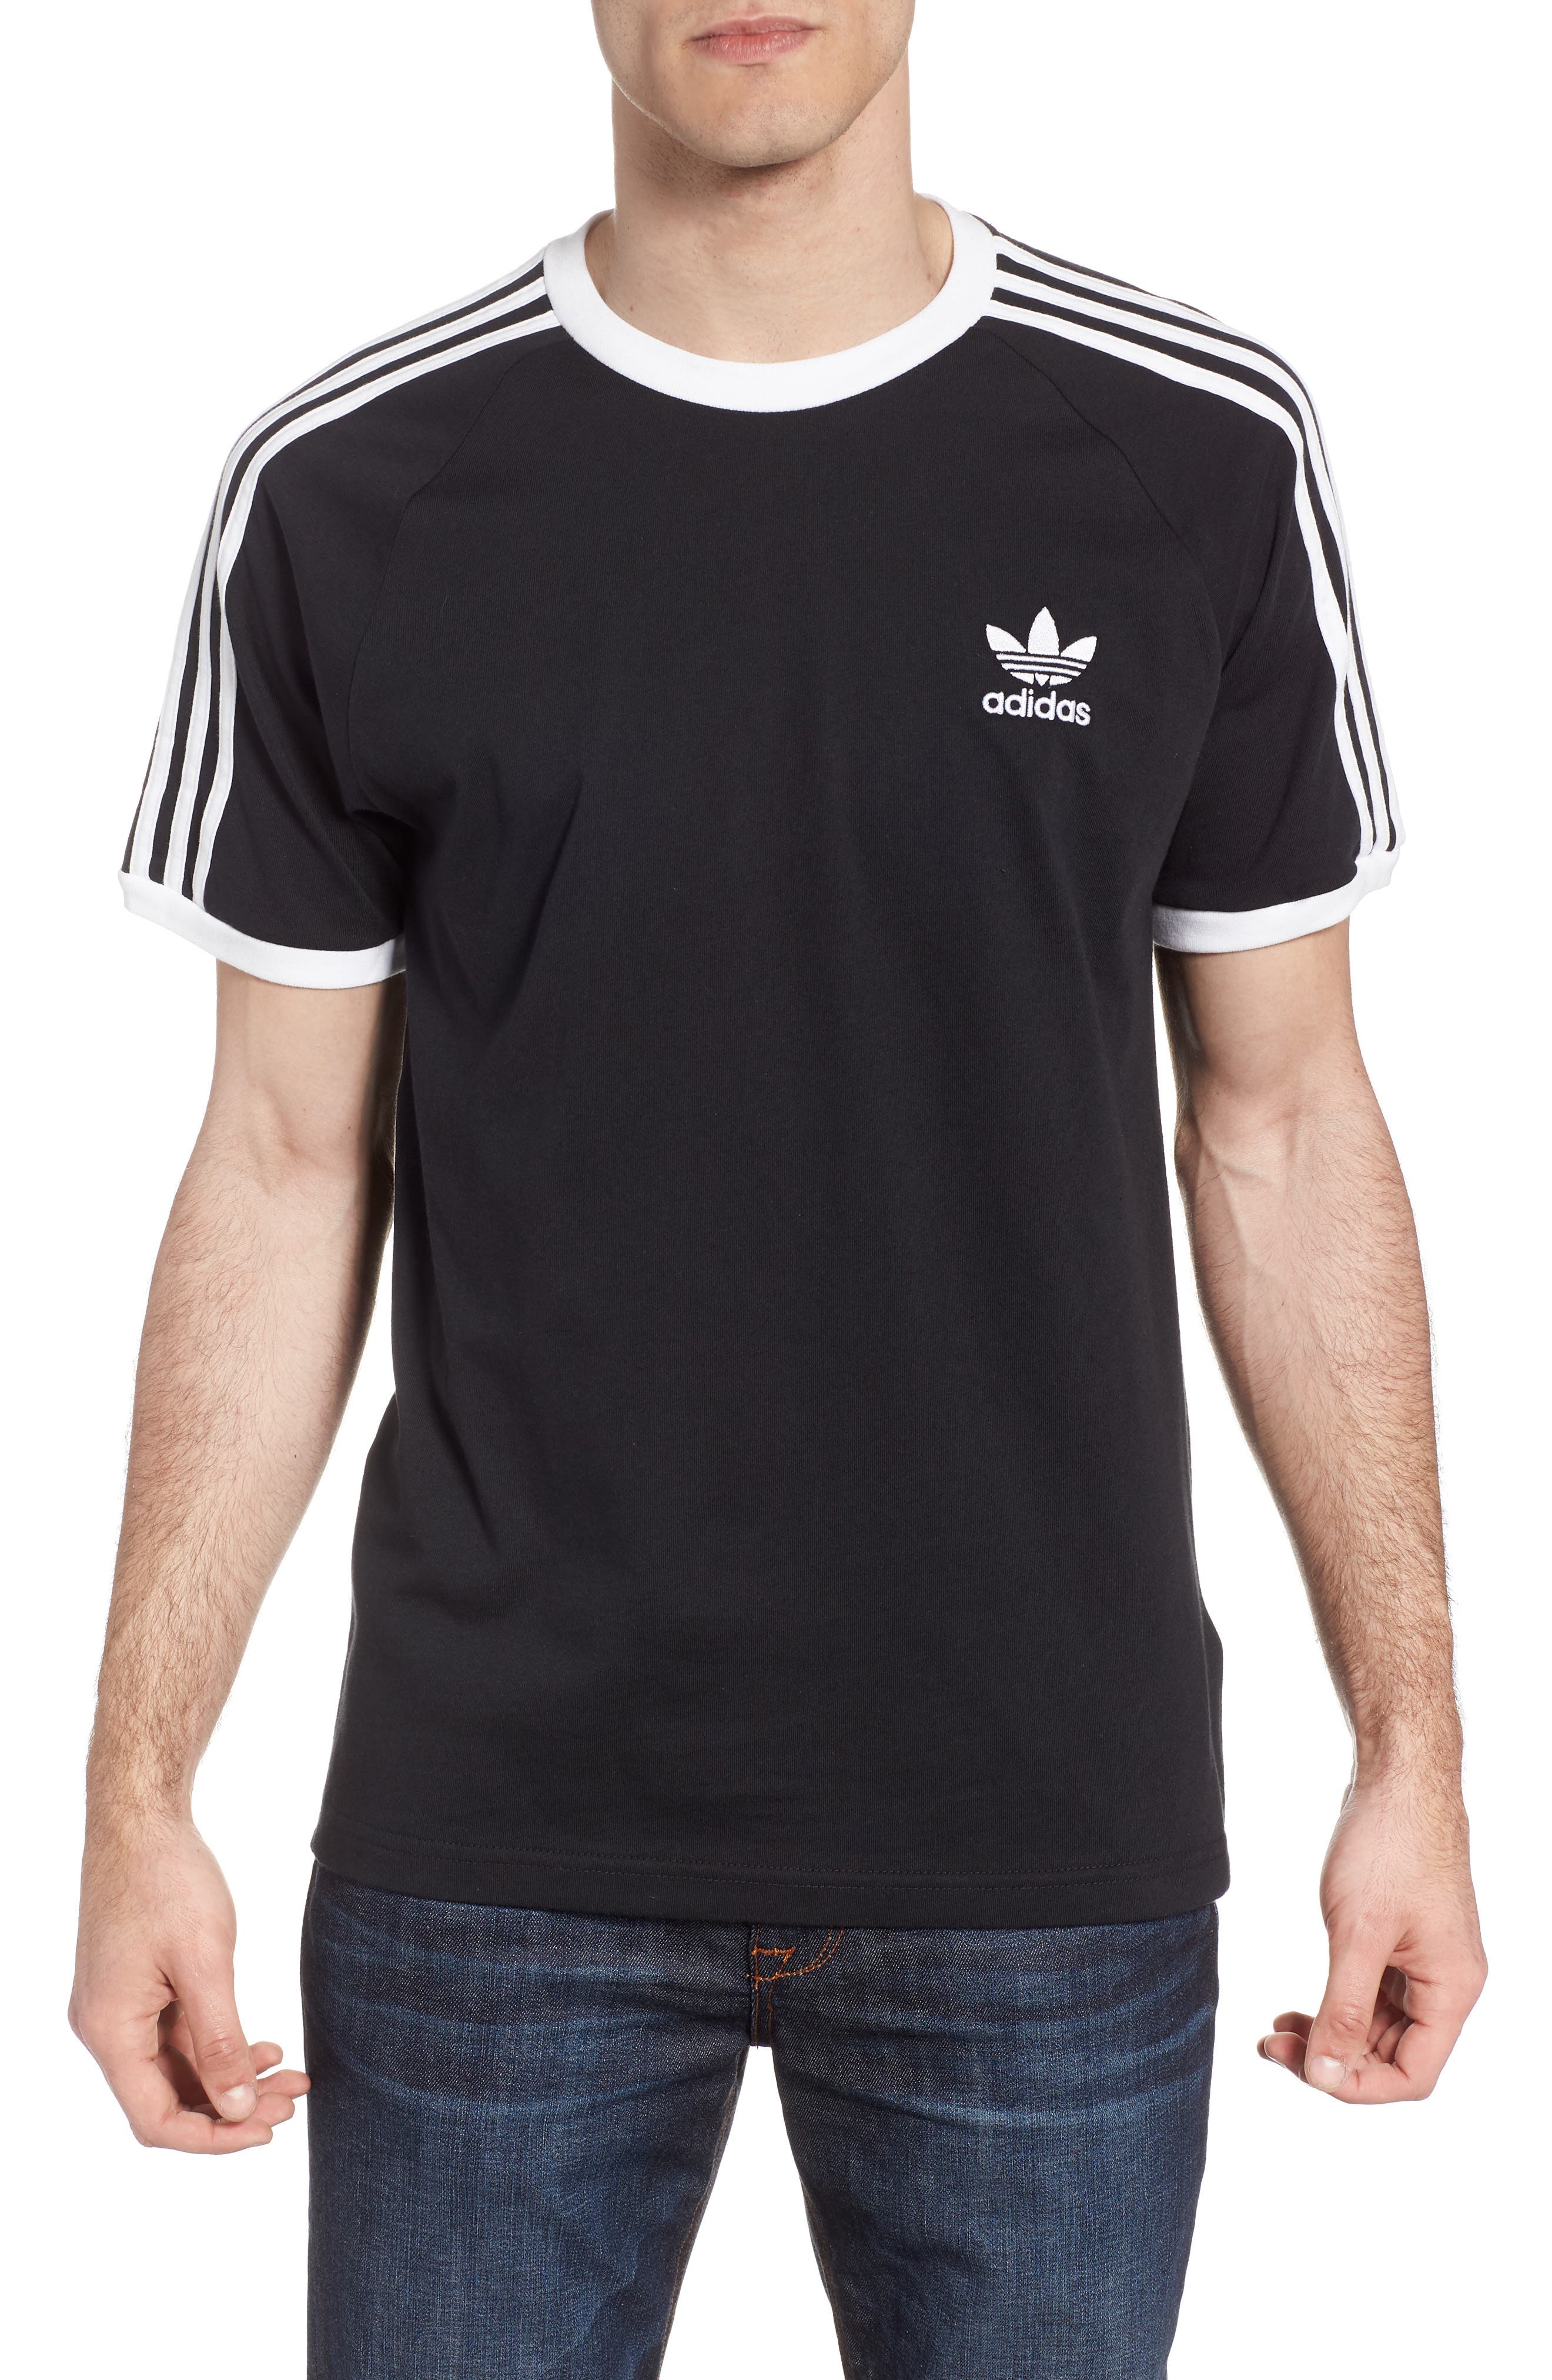 UPC 191027120977 product image for Men's Adidas Originals 3-Stripes T-Shirt, Size X-Large - Black | upcitemdb.com